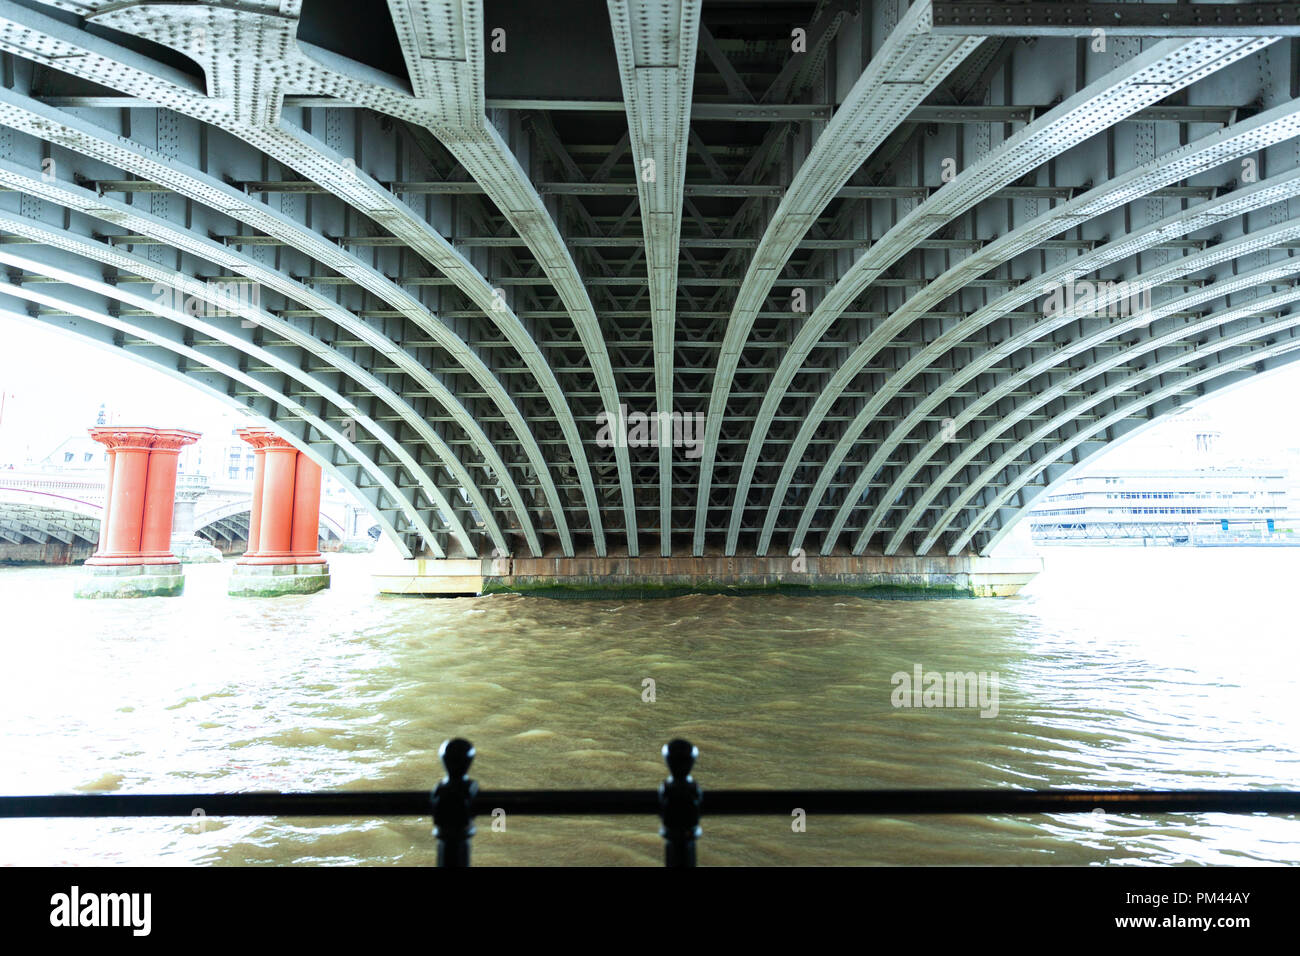 Underneath view of Blackfriars Railway Bridge over River Thames, London, England, UK. Stock Photo